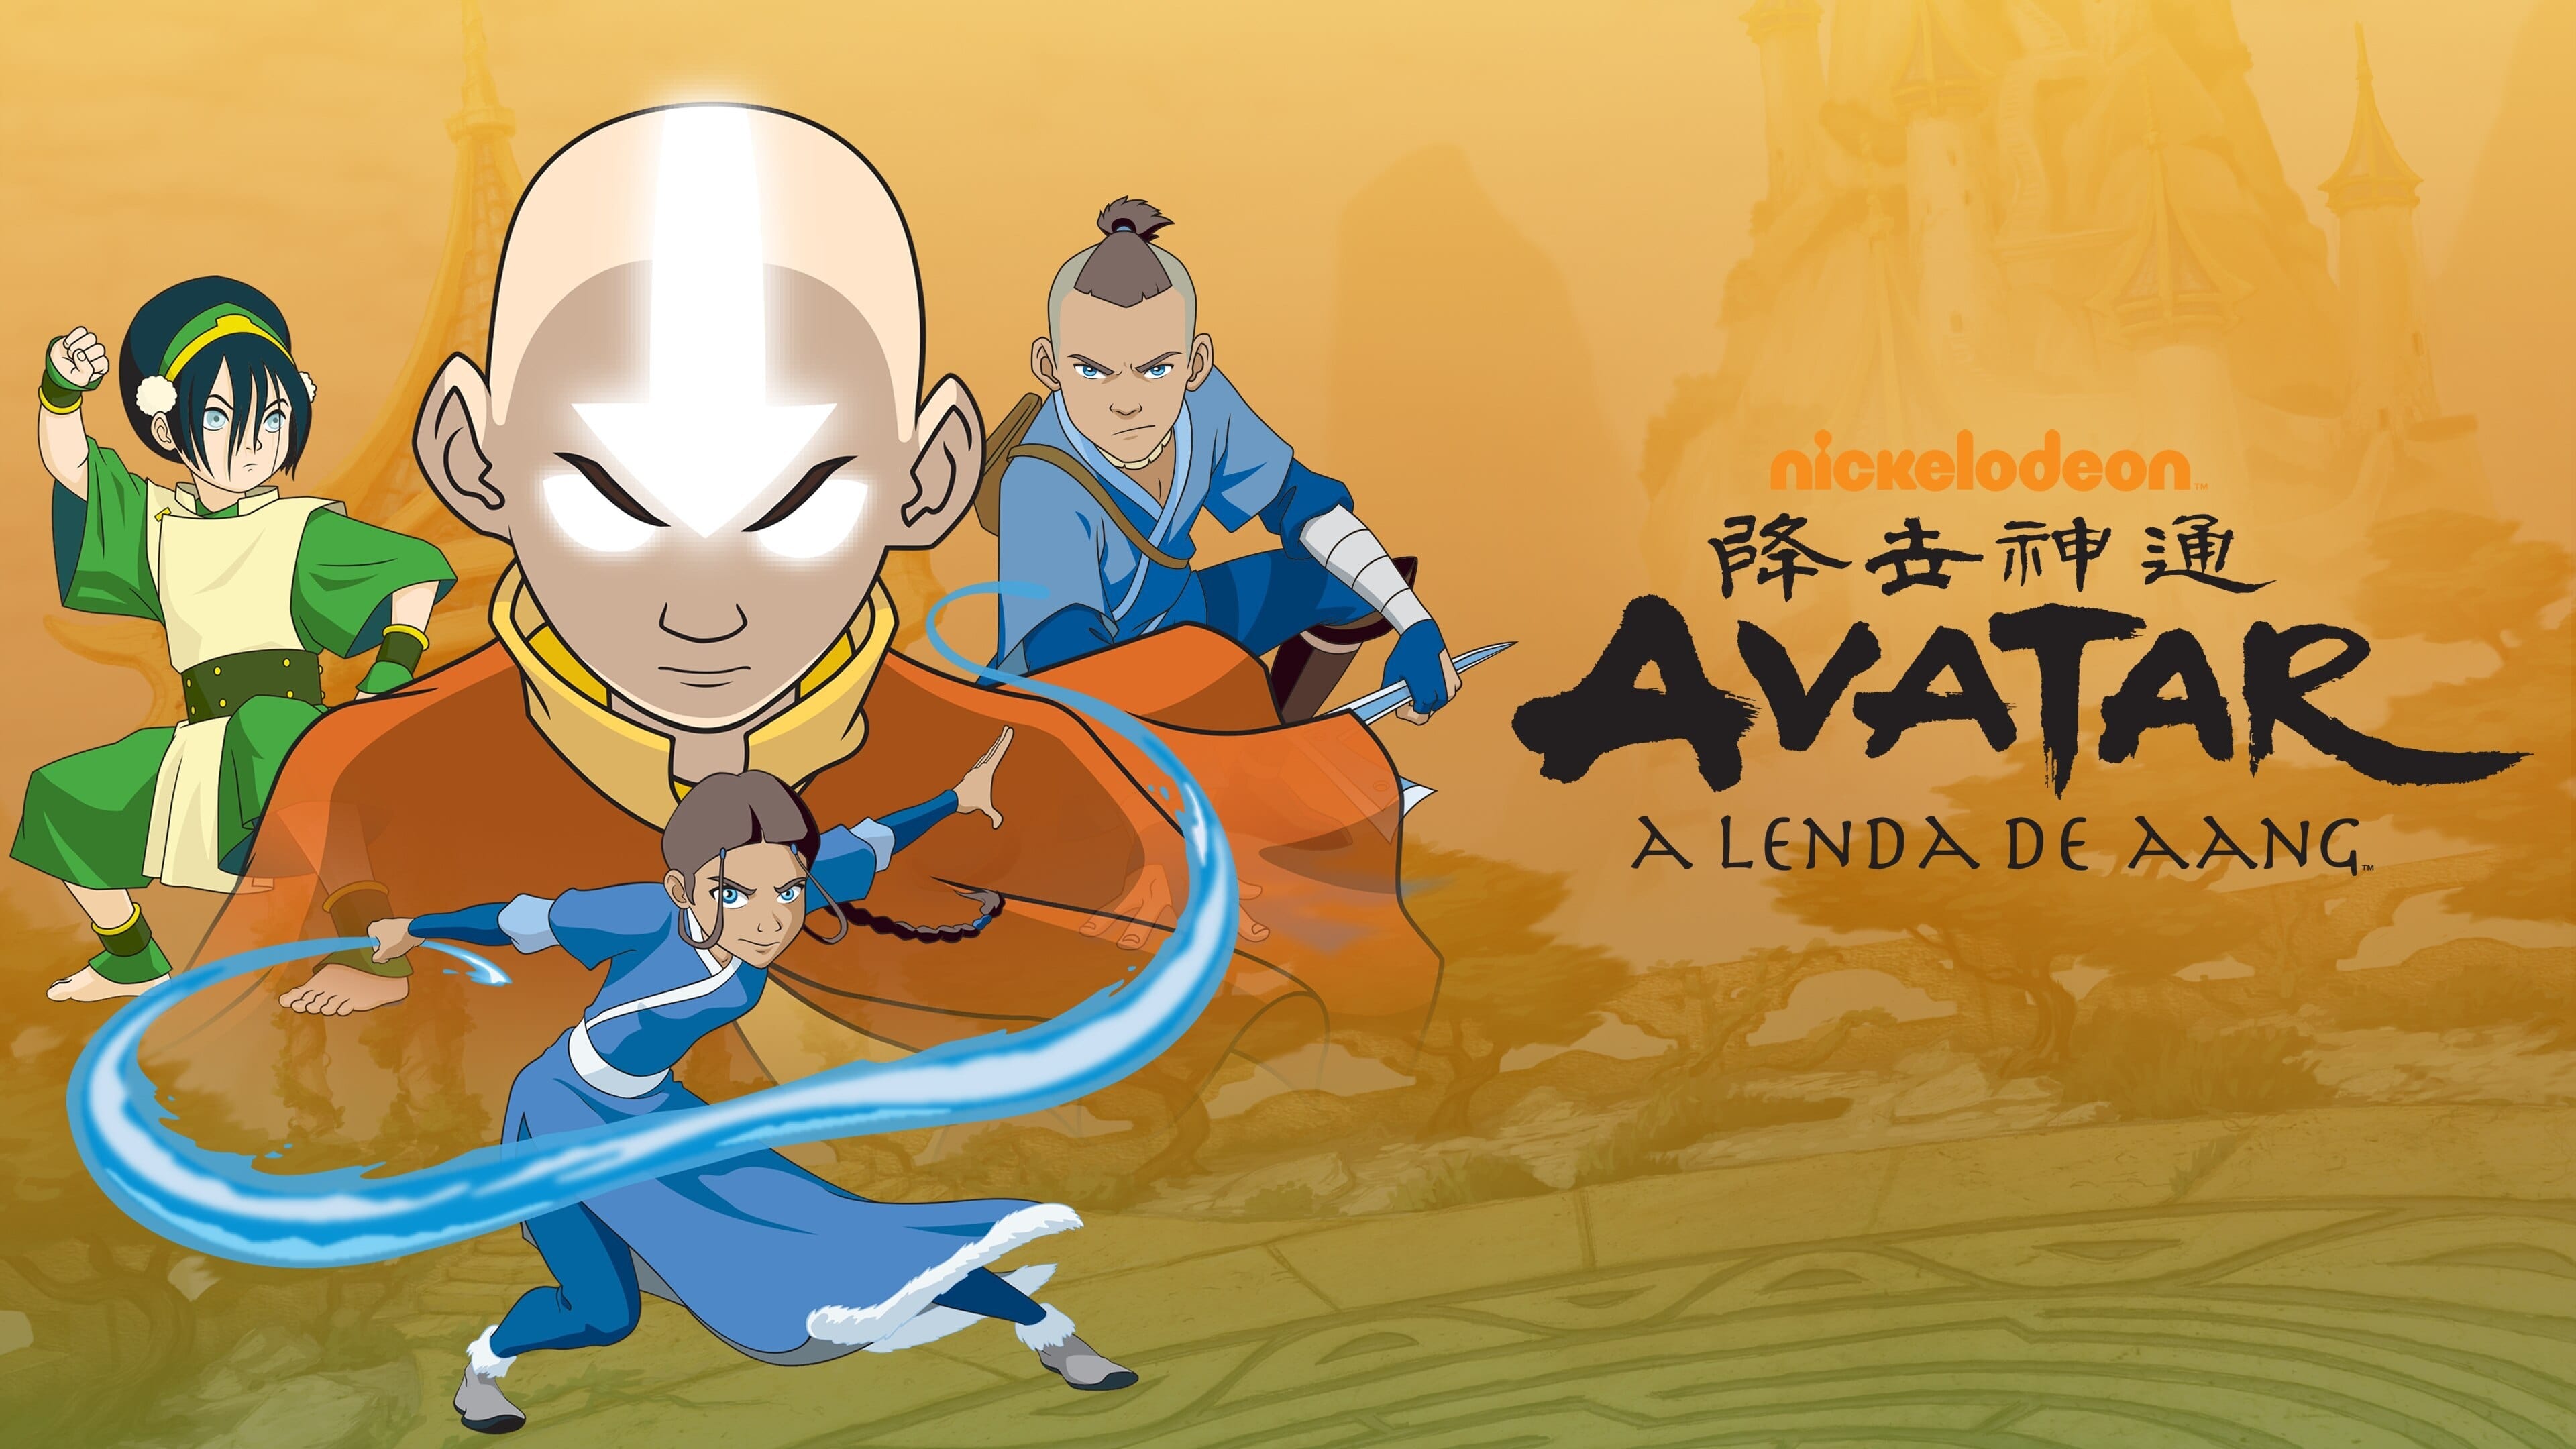 Anime Avatar: The Last Airbender 4k Ultra HD Wallpaper